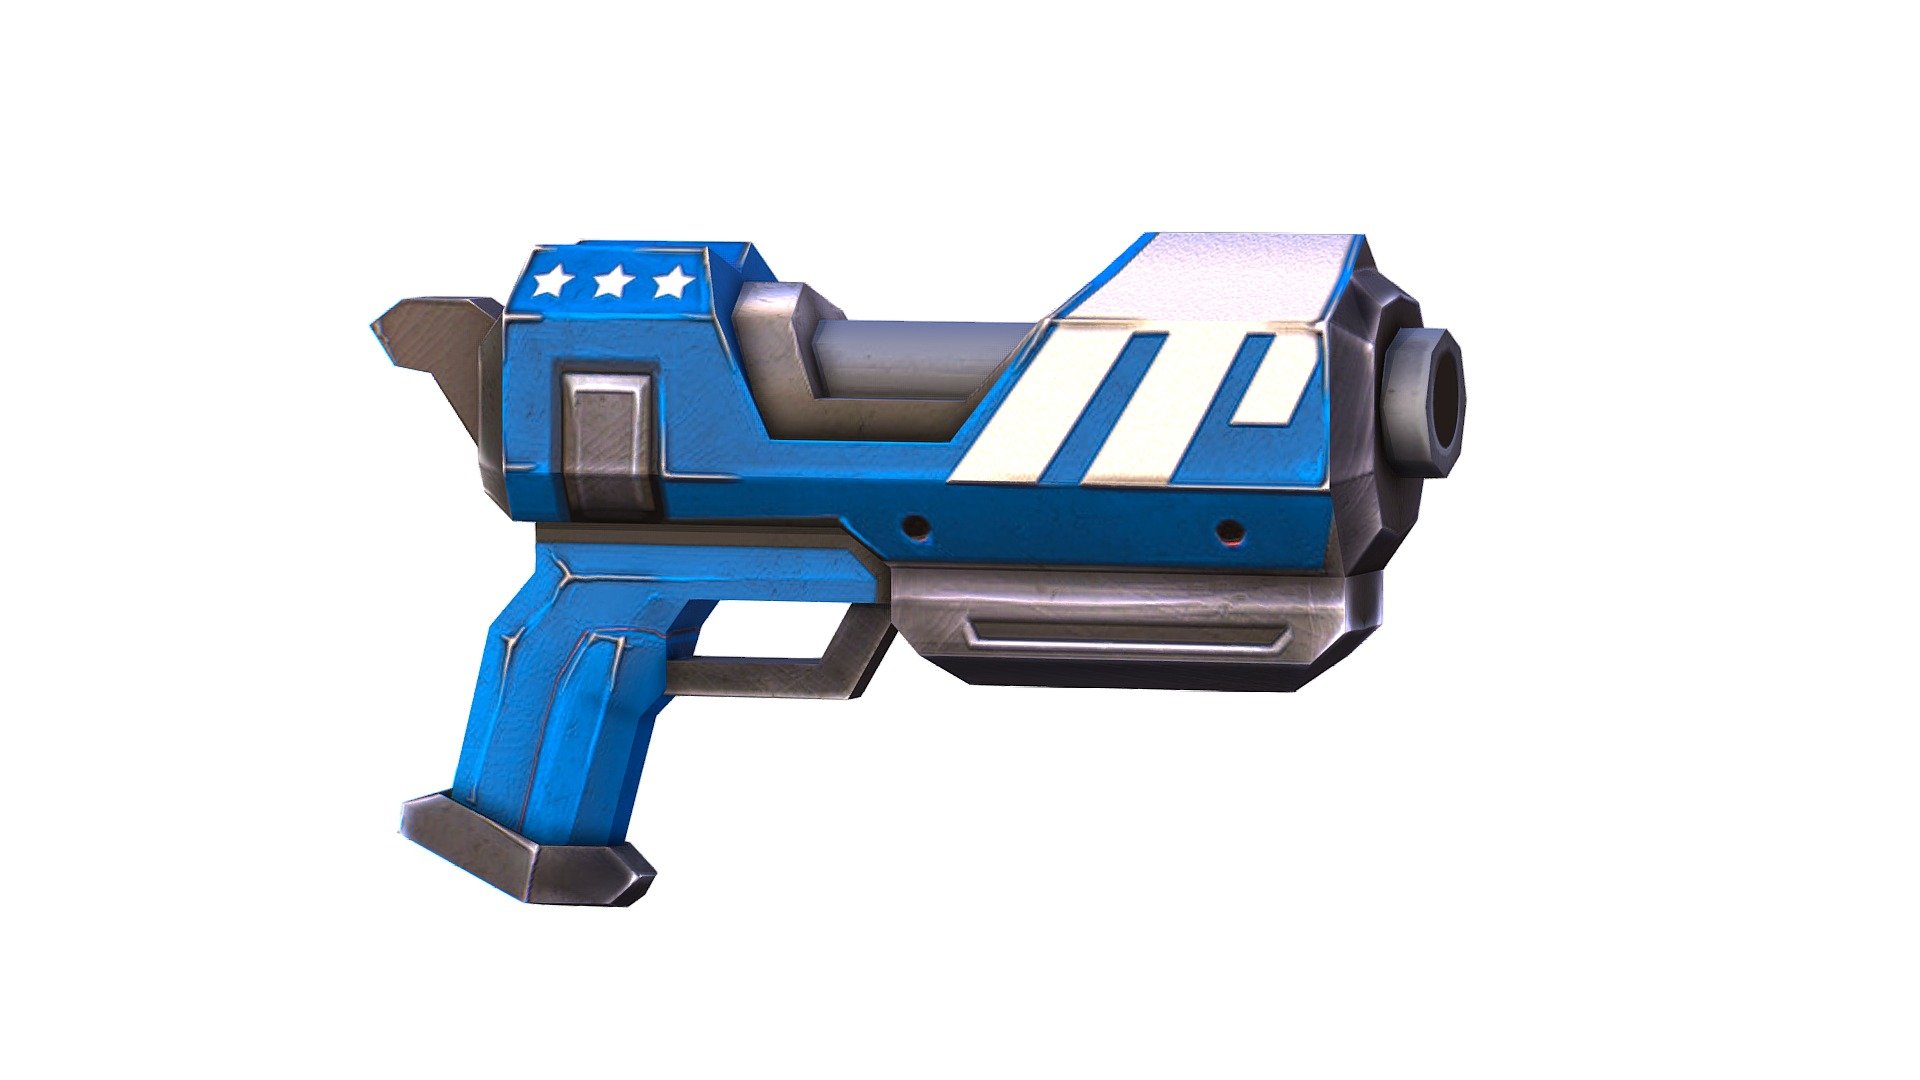 LowPoly Sci-Fi Сartoon Pistol Gun - 3dsMax file included - LowPoly Sci-Fi Cartoon Pistol Gun - Buy Royalty Free 3D model by Oleg Shuldiakov (@olegshuldiakov) 3d model